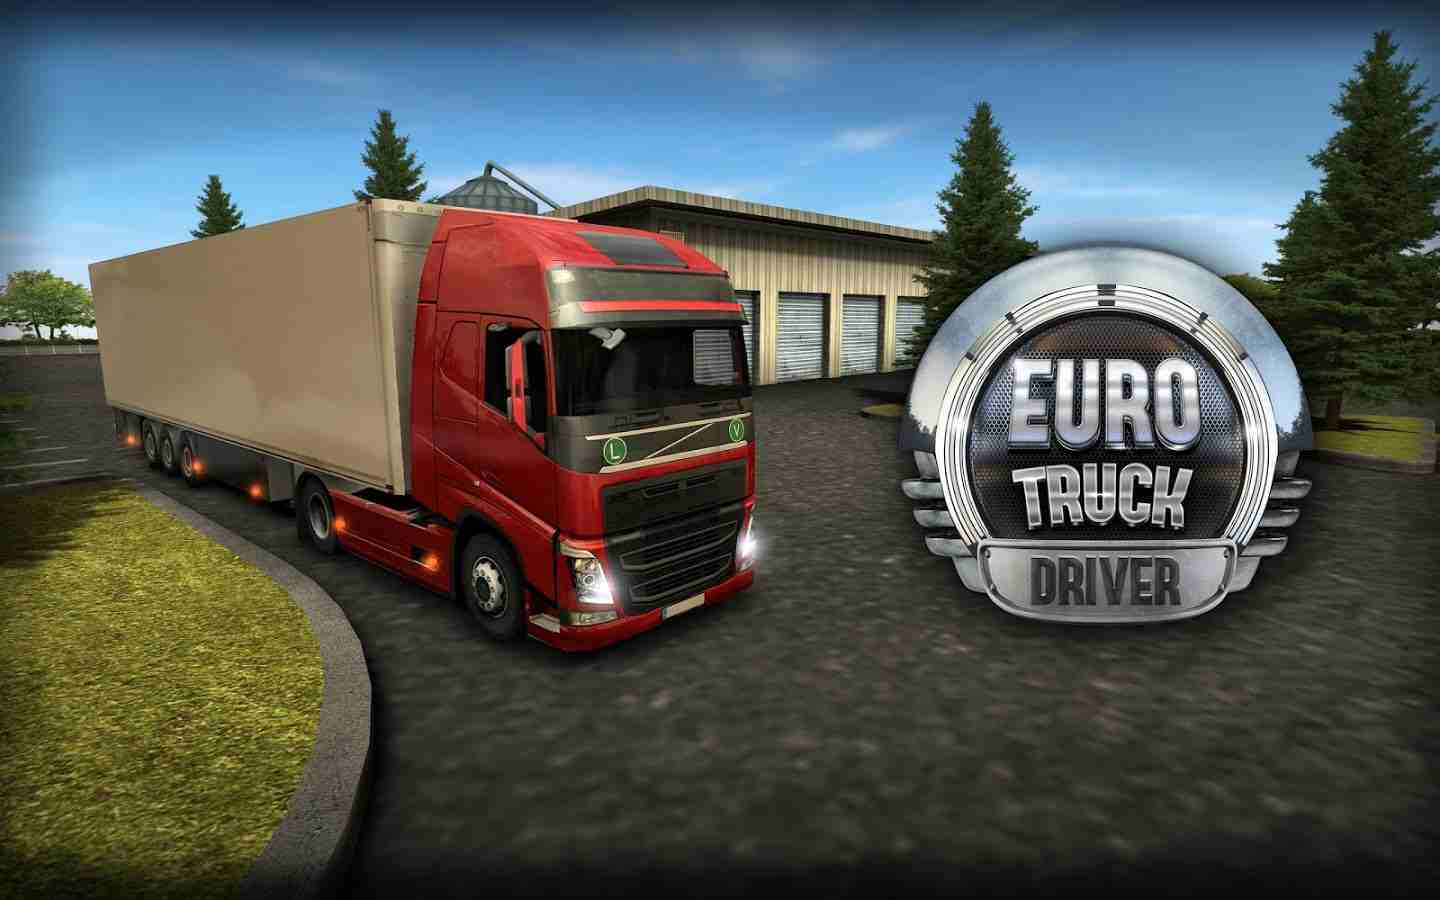 Euro Truck Evolution Simulator 4.2 APK MOD [Huge Amount Of Money]